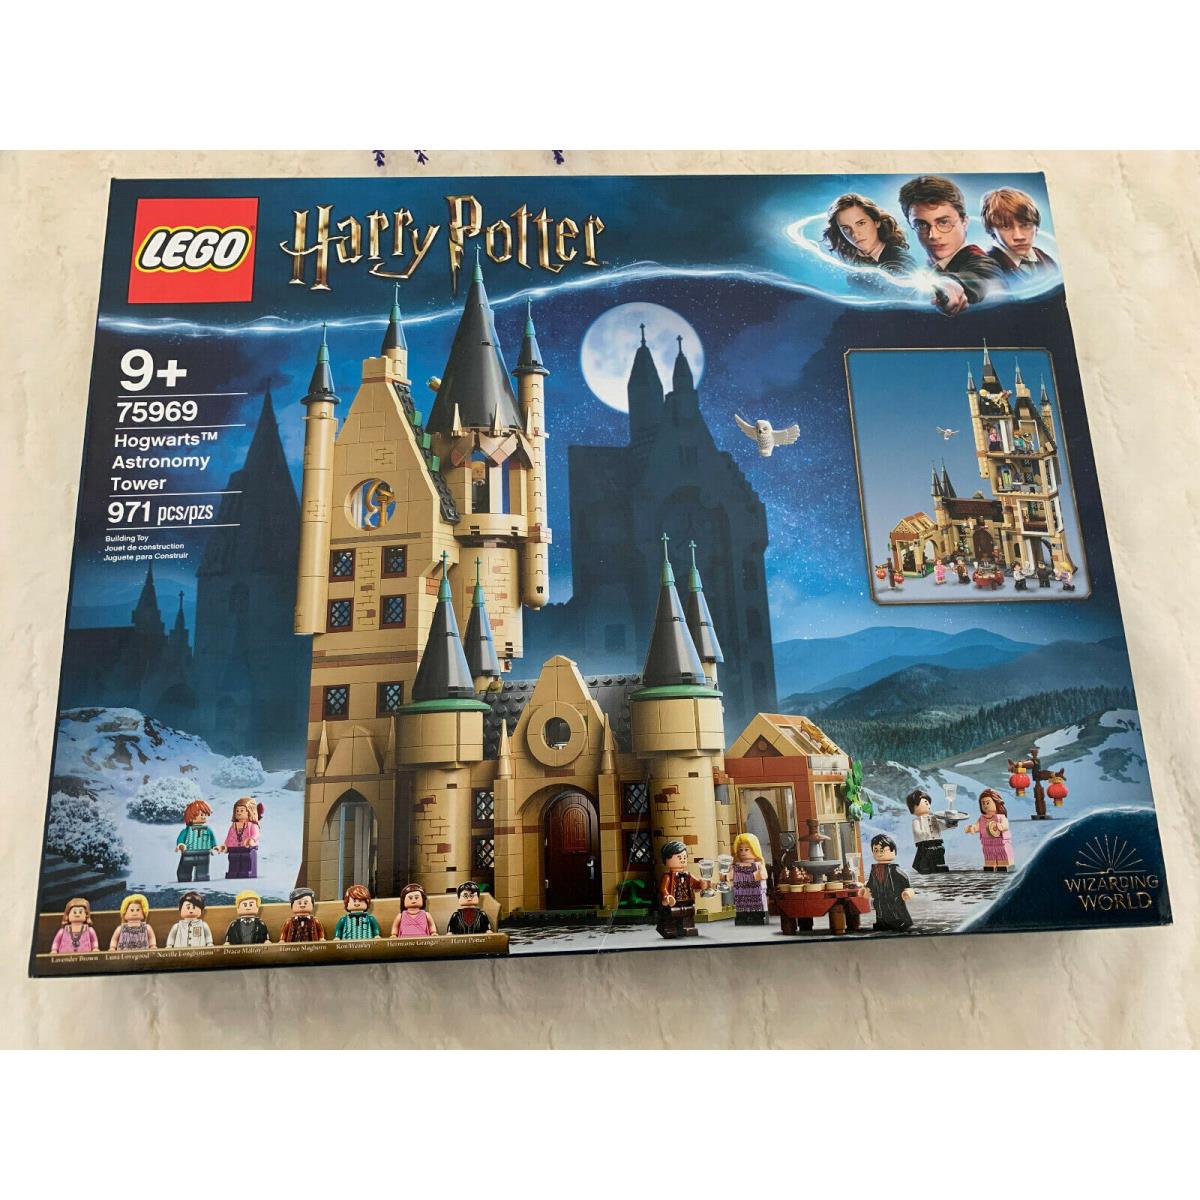 Lego Harry Potter 75969 Hogwarts Astronomy Tower Building Set 971 Pieces